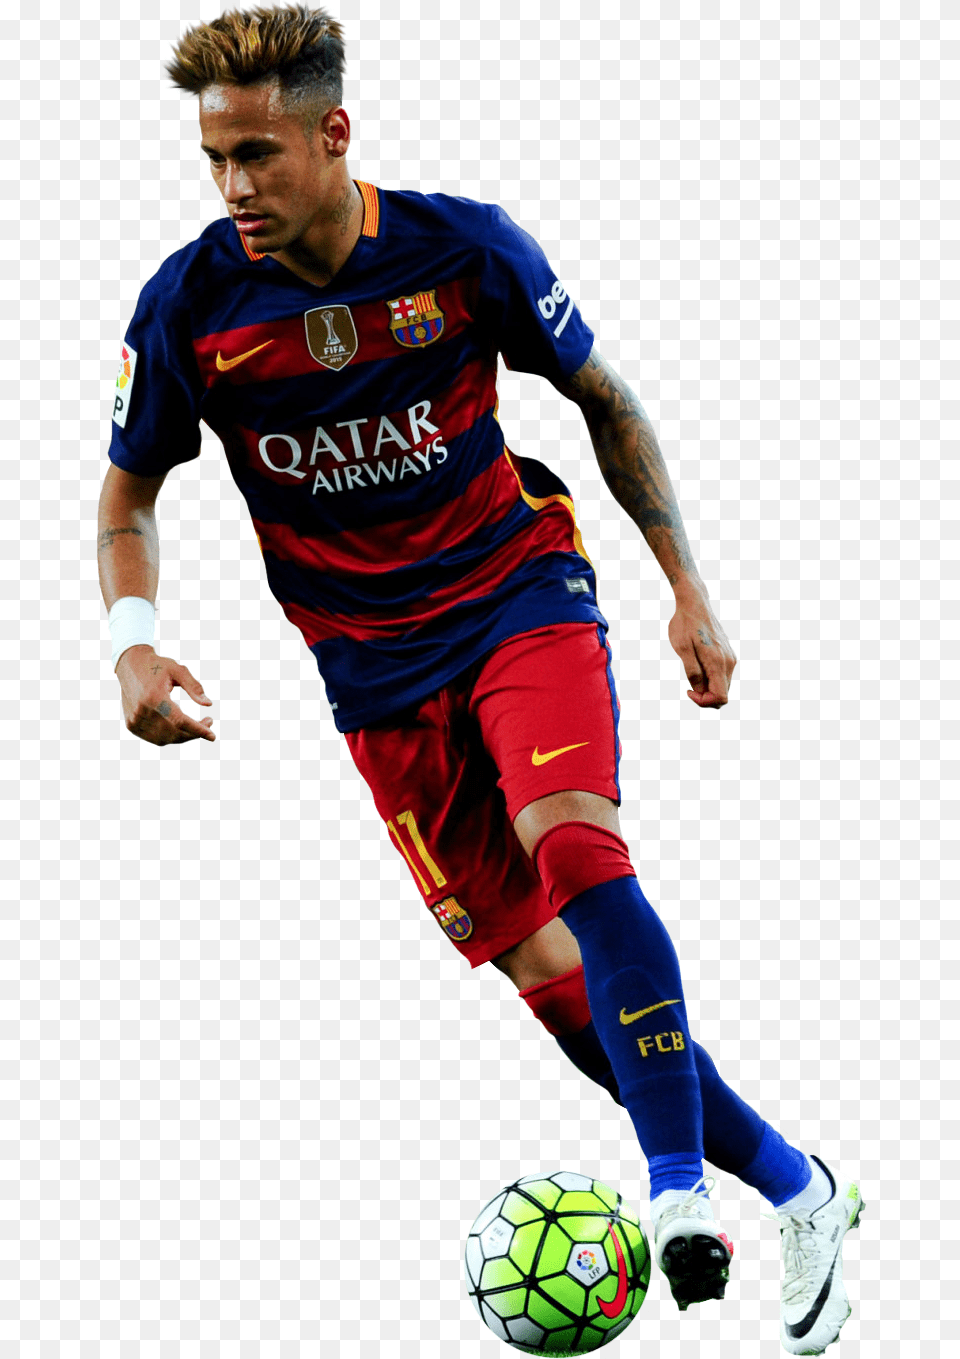 Beautiful Tricou Fc Barcelona Neymar Jr Fc Barcelona, Ball, Sport, Sphere, Soccer Ball Png Image